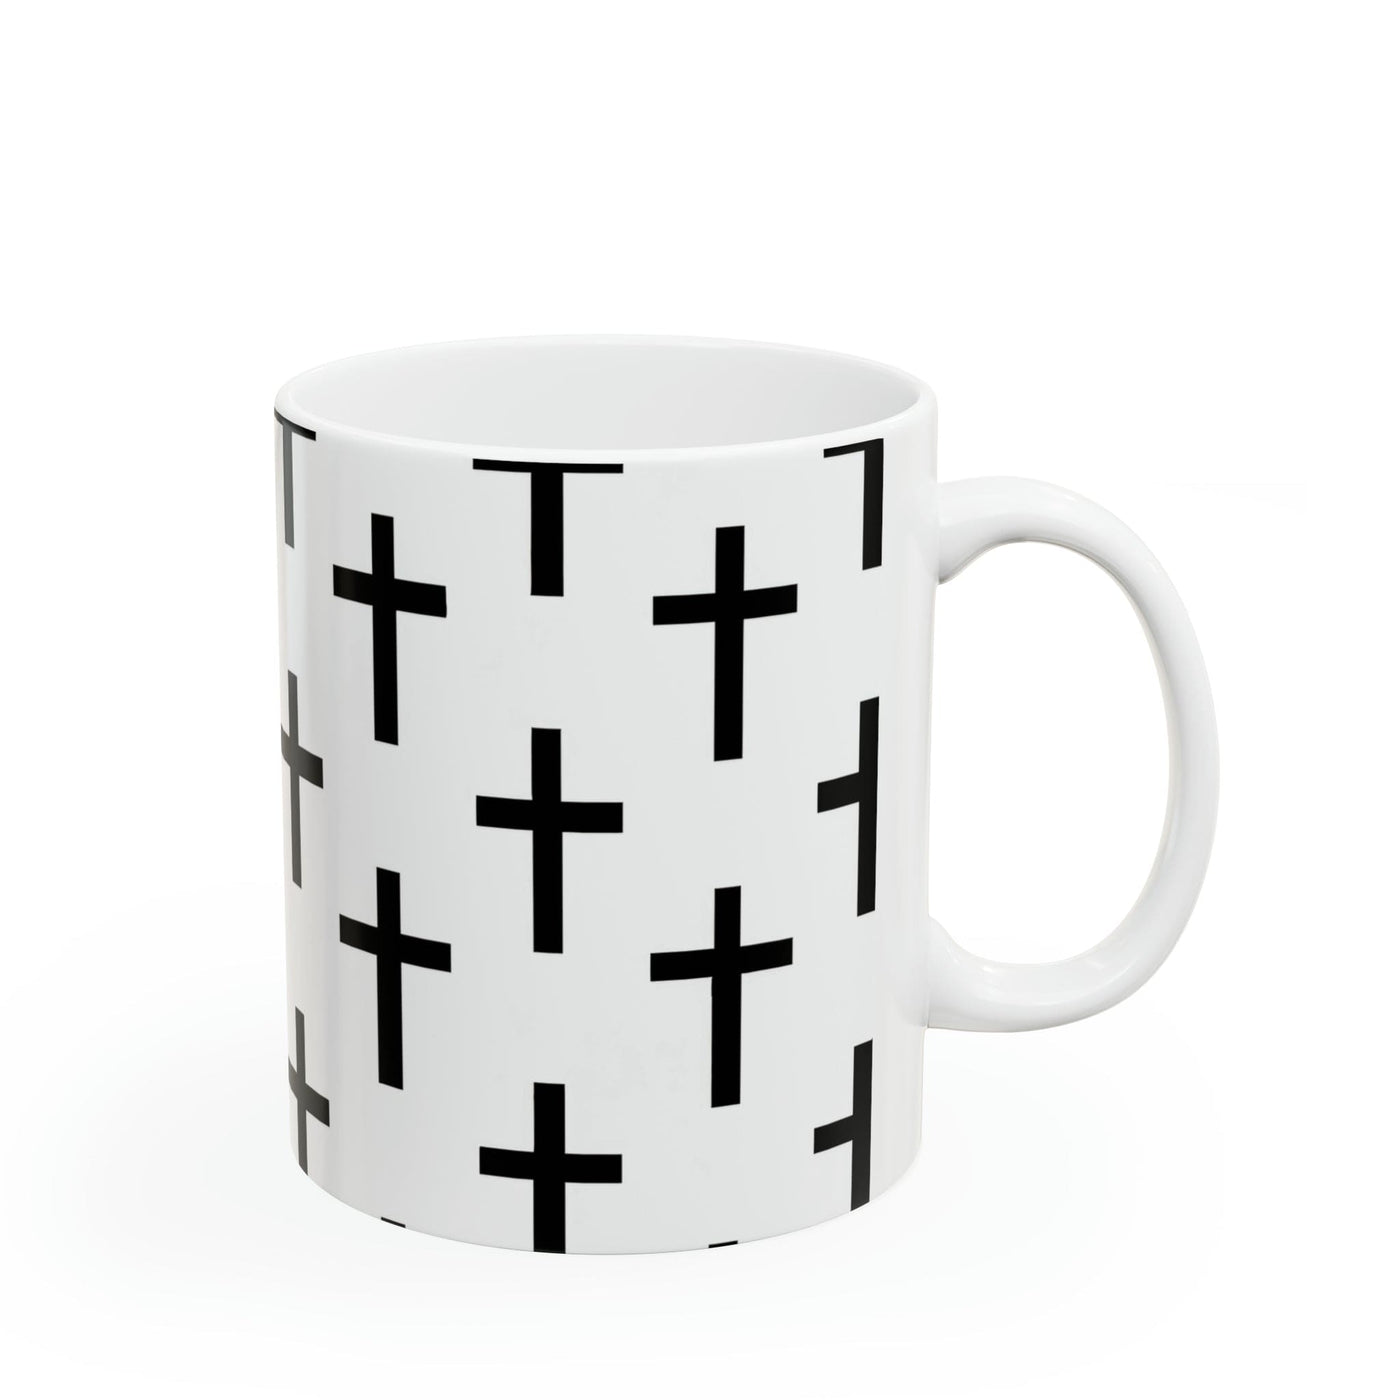 Ceramic Mug 15oz White And Black Seamless Cross Pattern - Decorative | Mugs 11oz